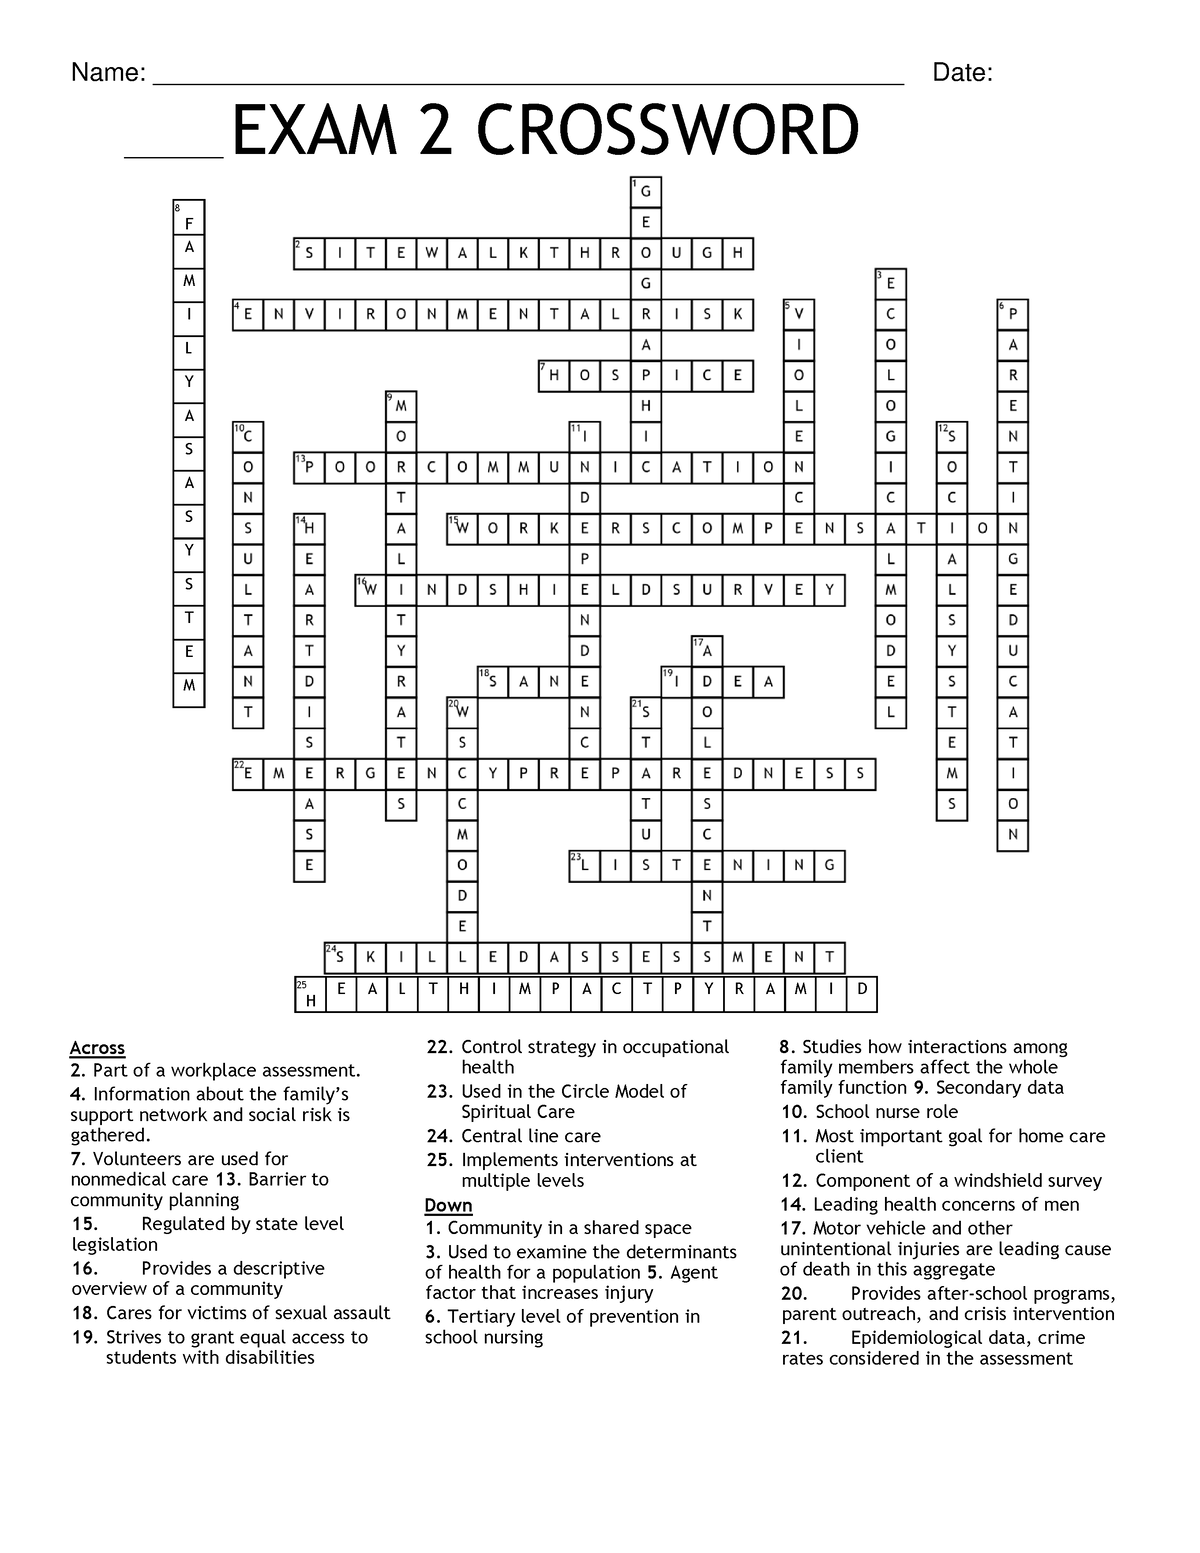 EXAM 2 Crossword answer key Name